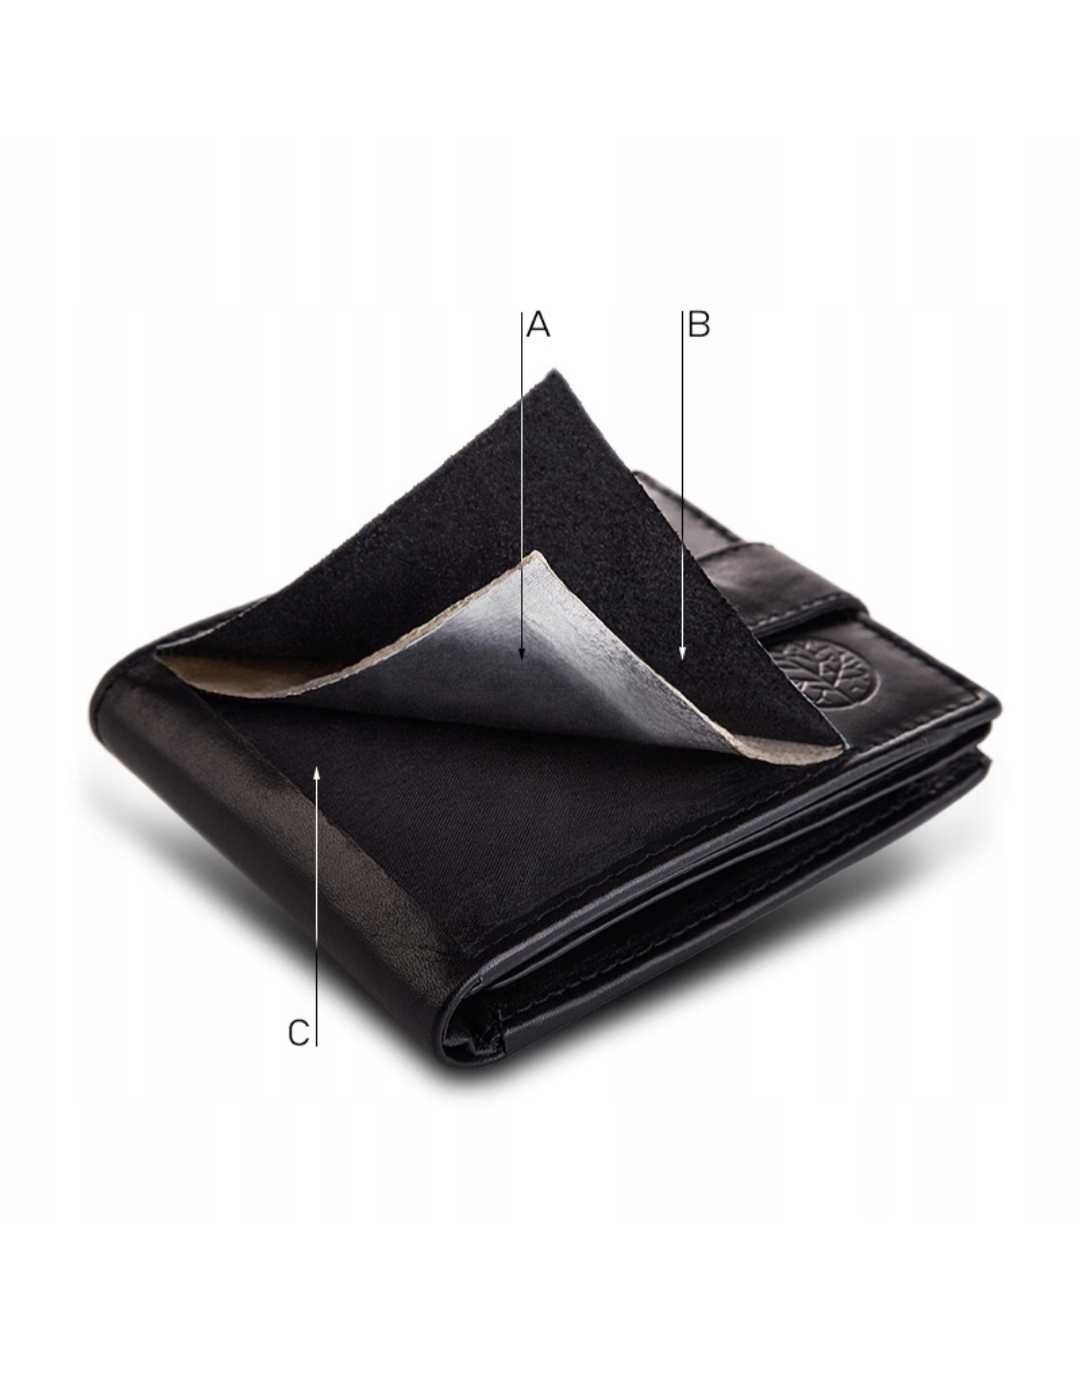 NOWY elegancki skórzany portfel męski czarny skóra naturalna RFID